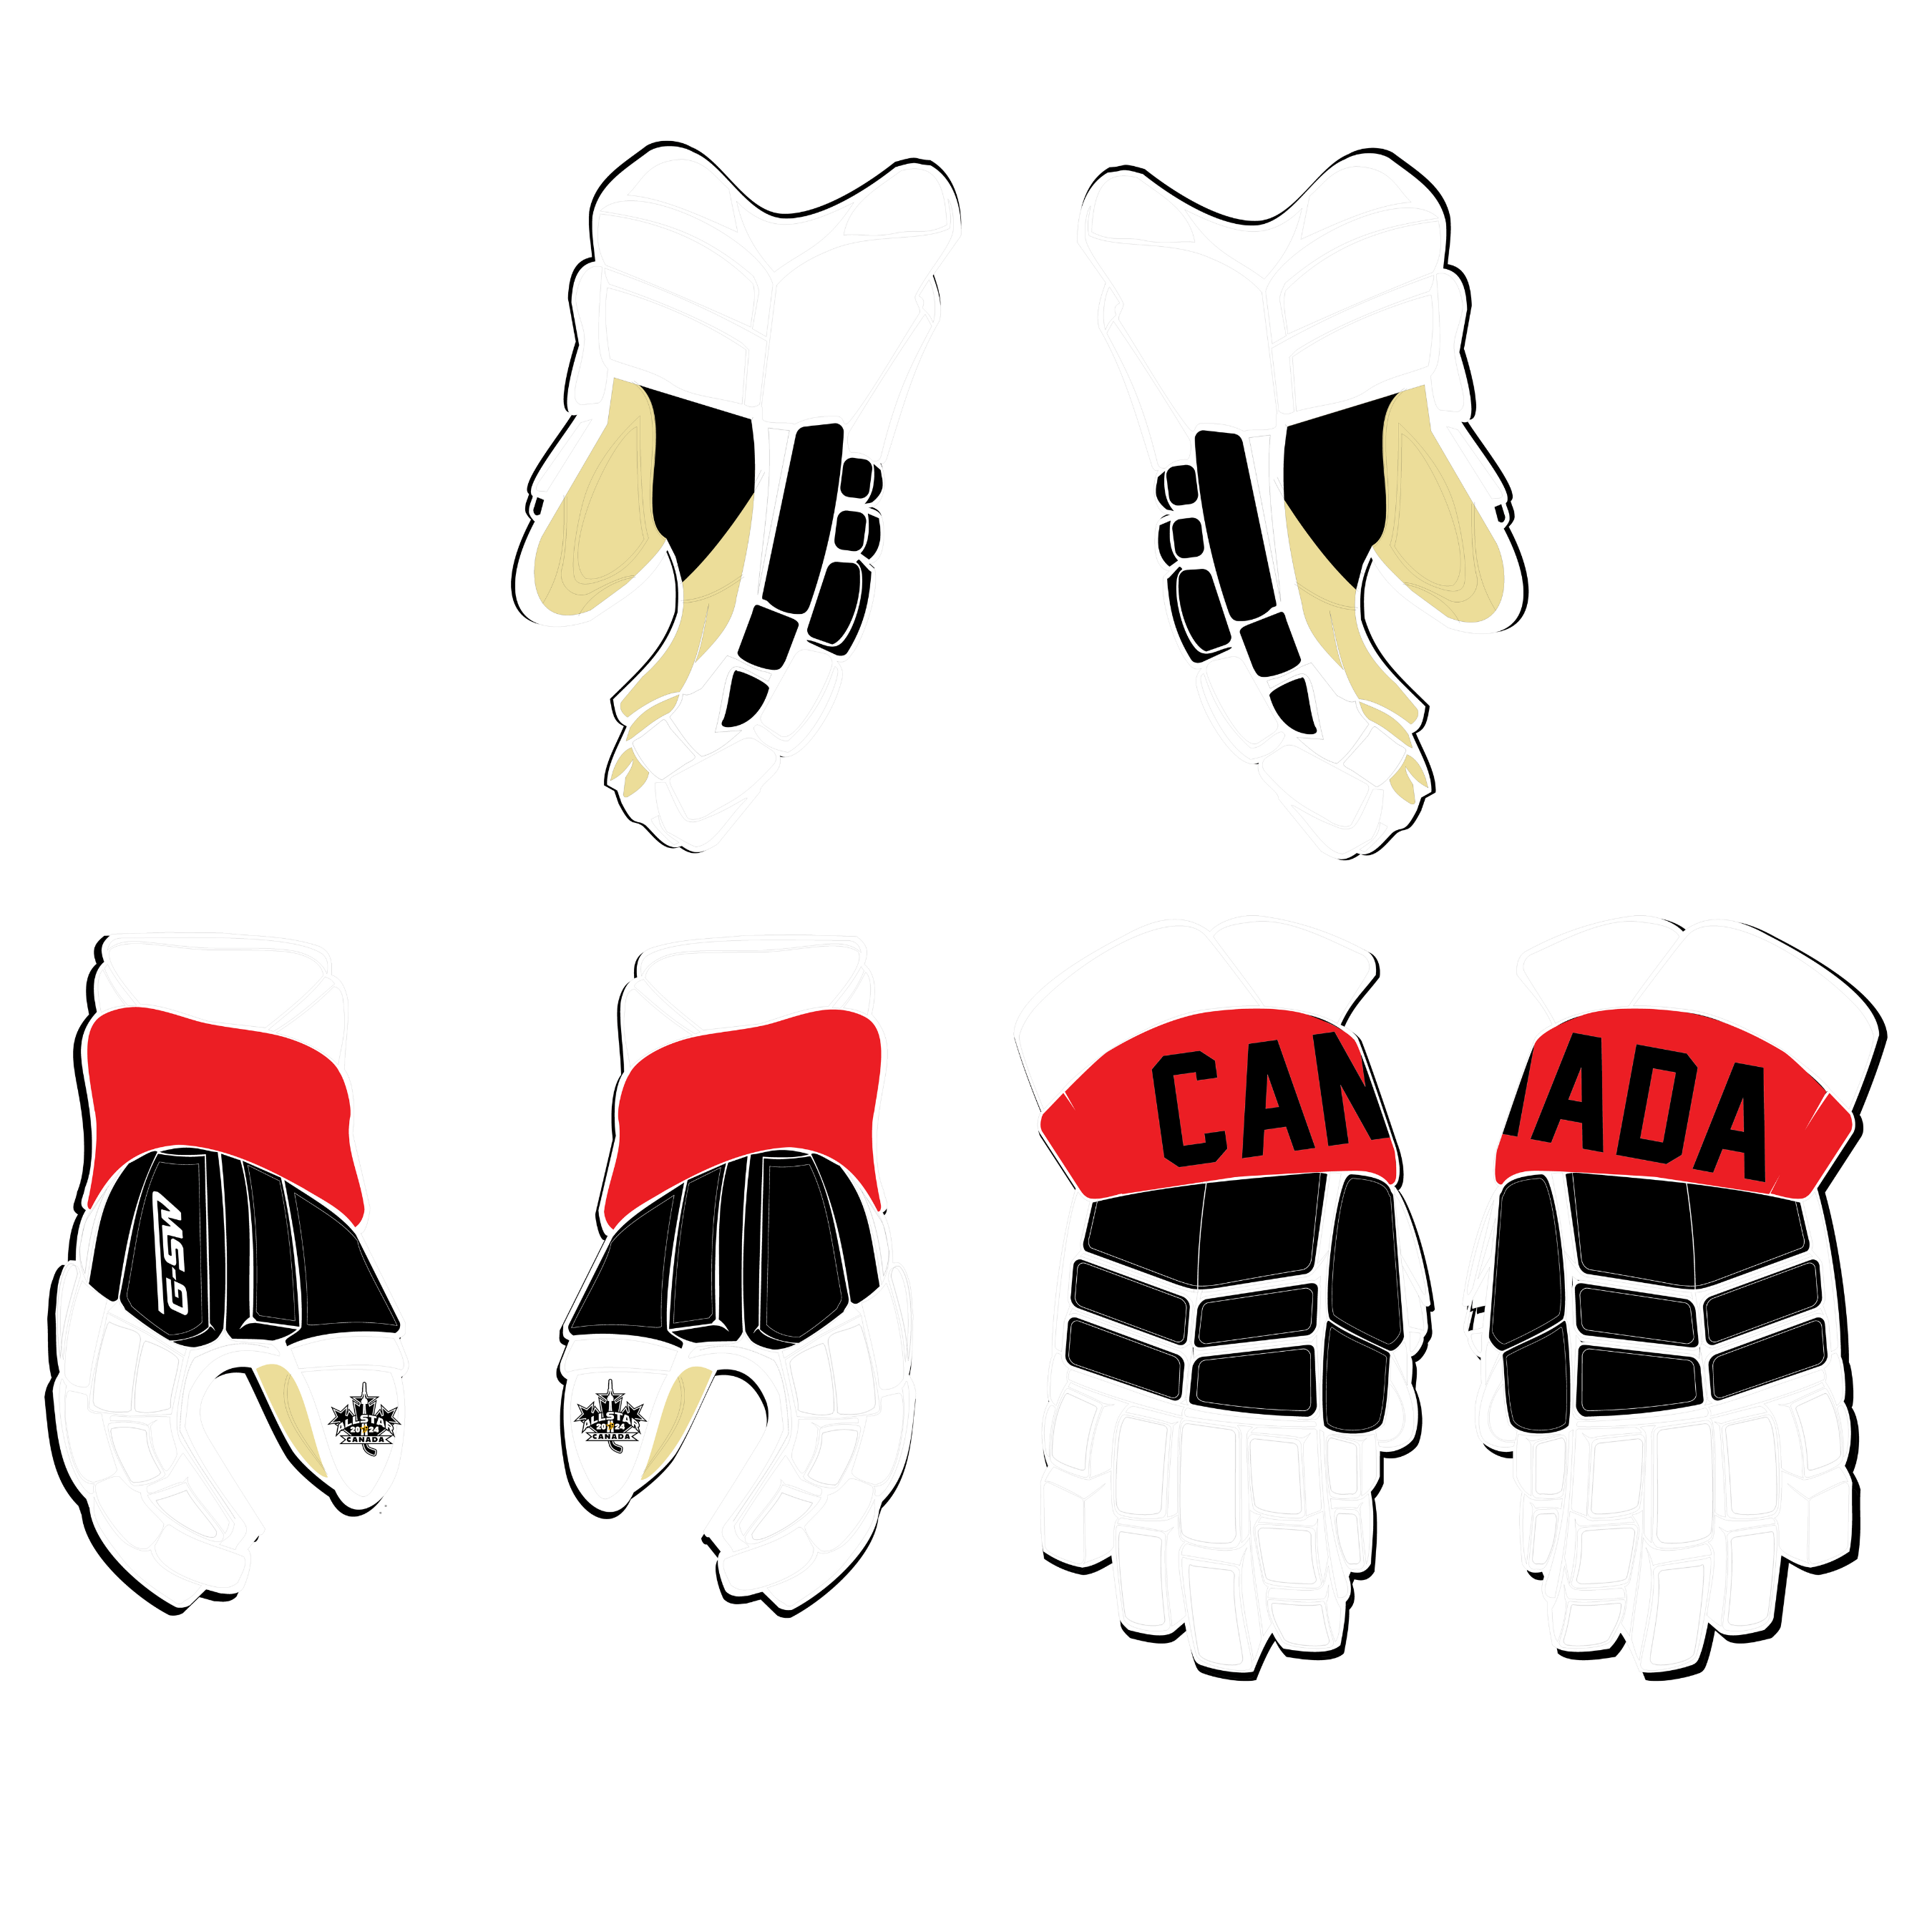 All Star Canada Custom Hockey Gloves